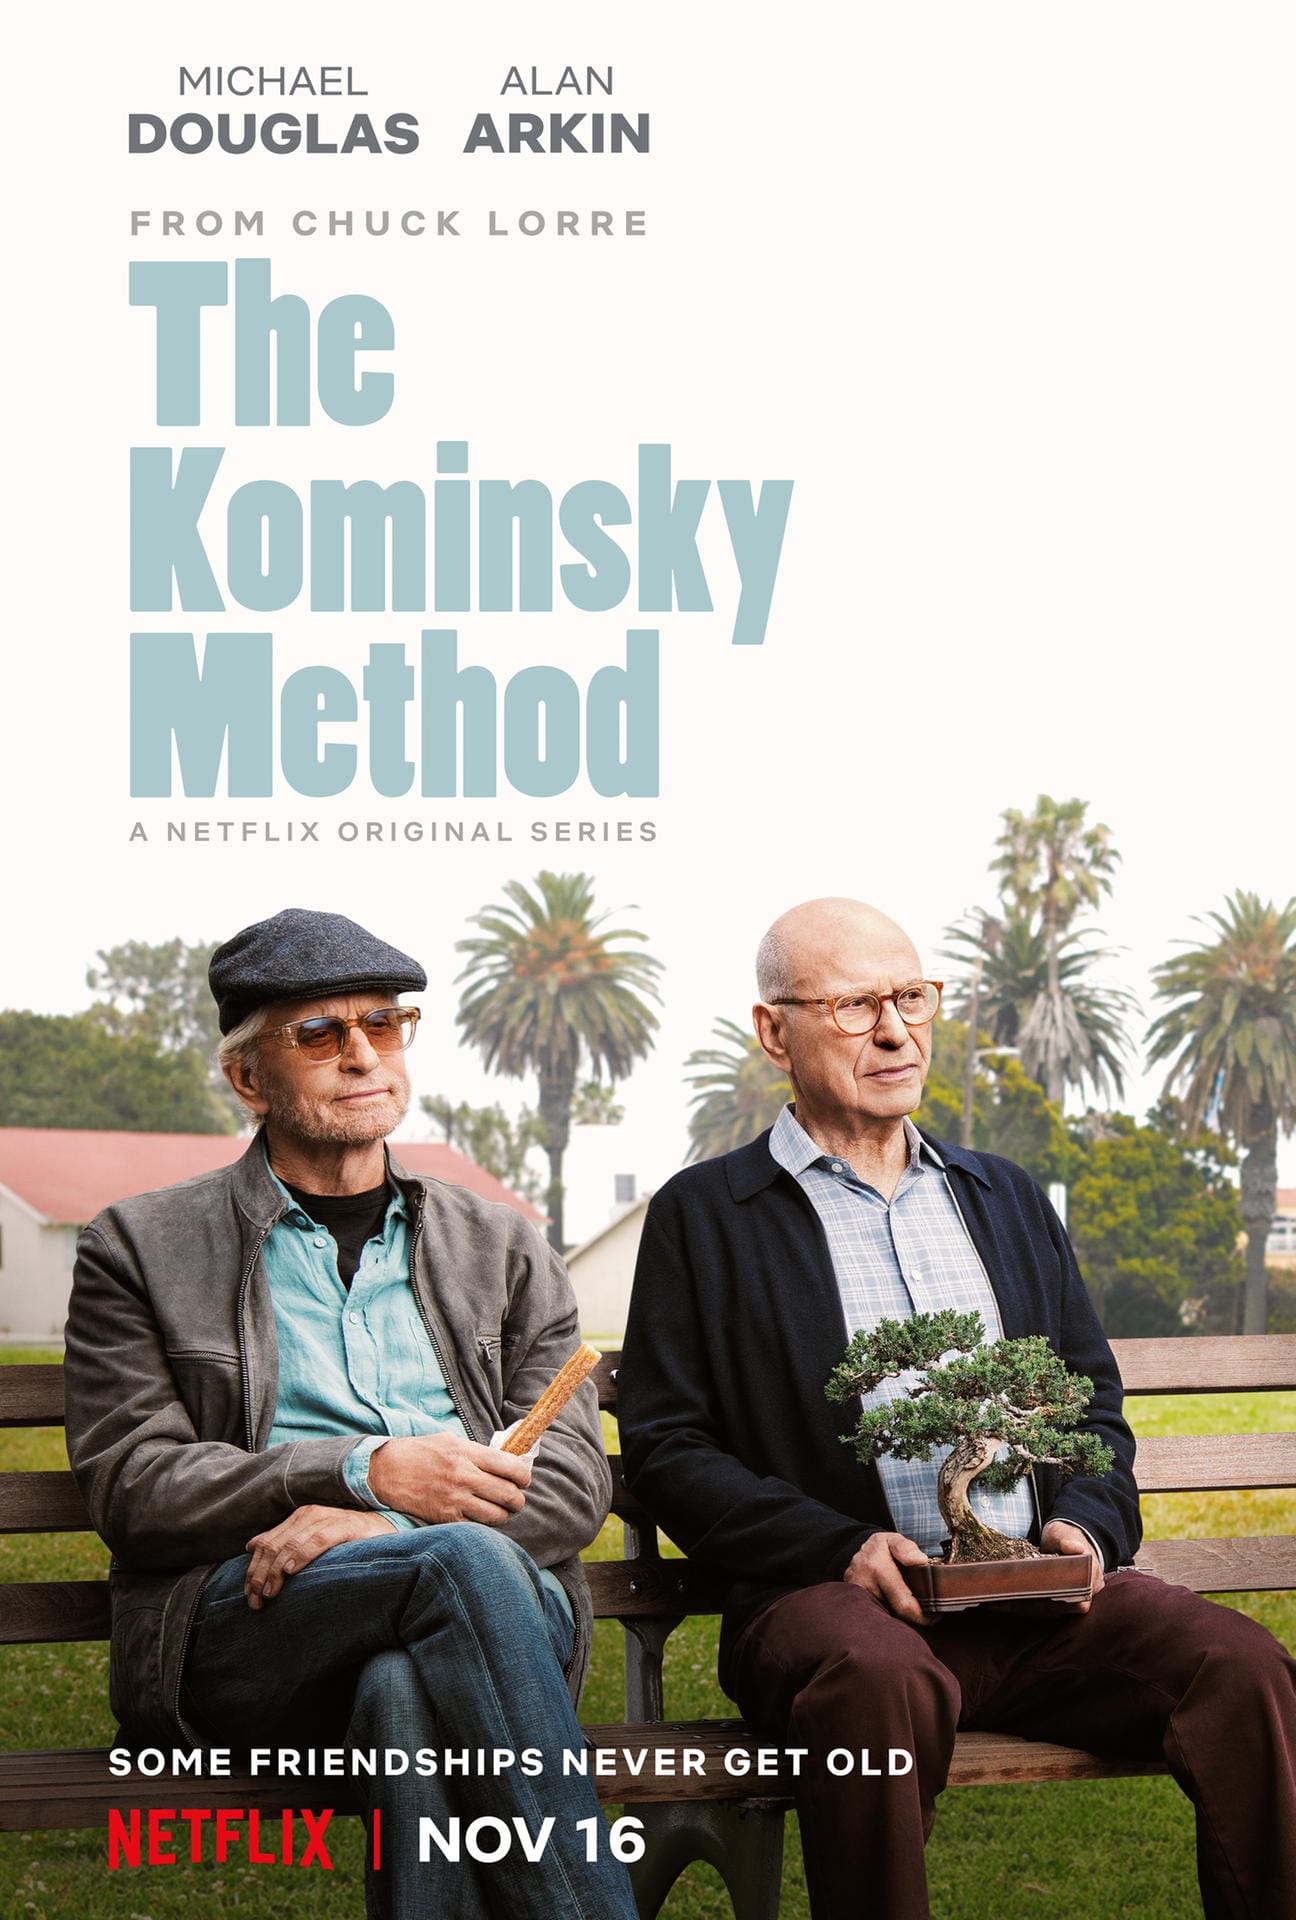 "The Kominsky Method"